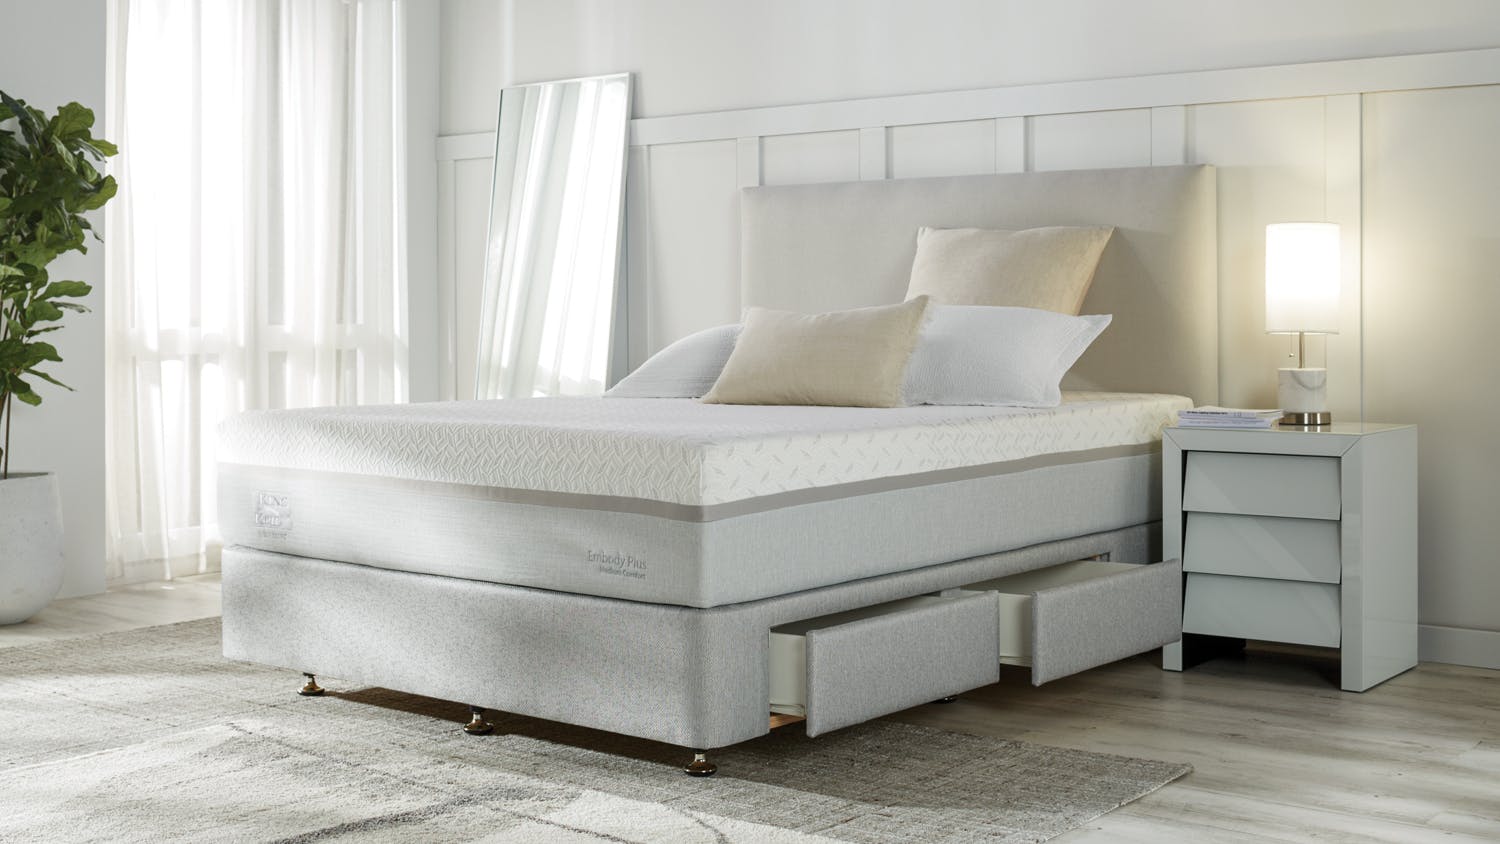 King Koil Embody Plus Medium Queen Mattress with Designer Silver Drawer Bed Base